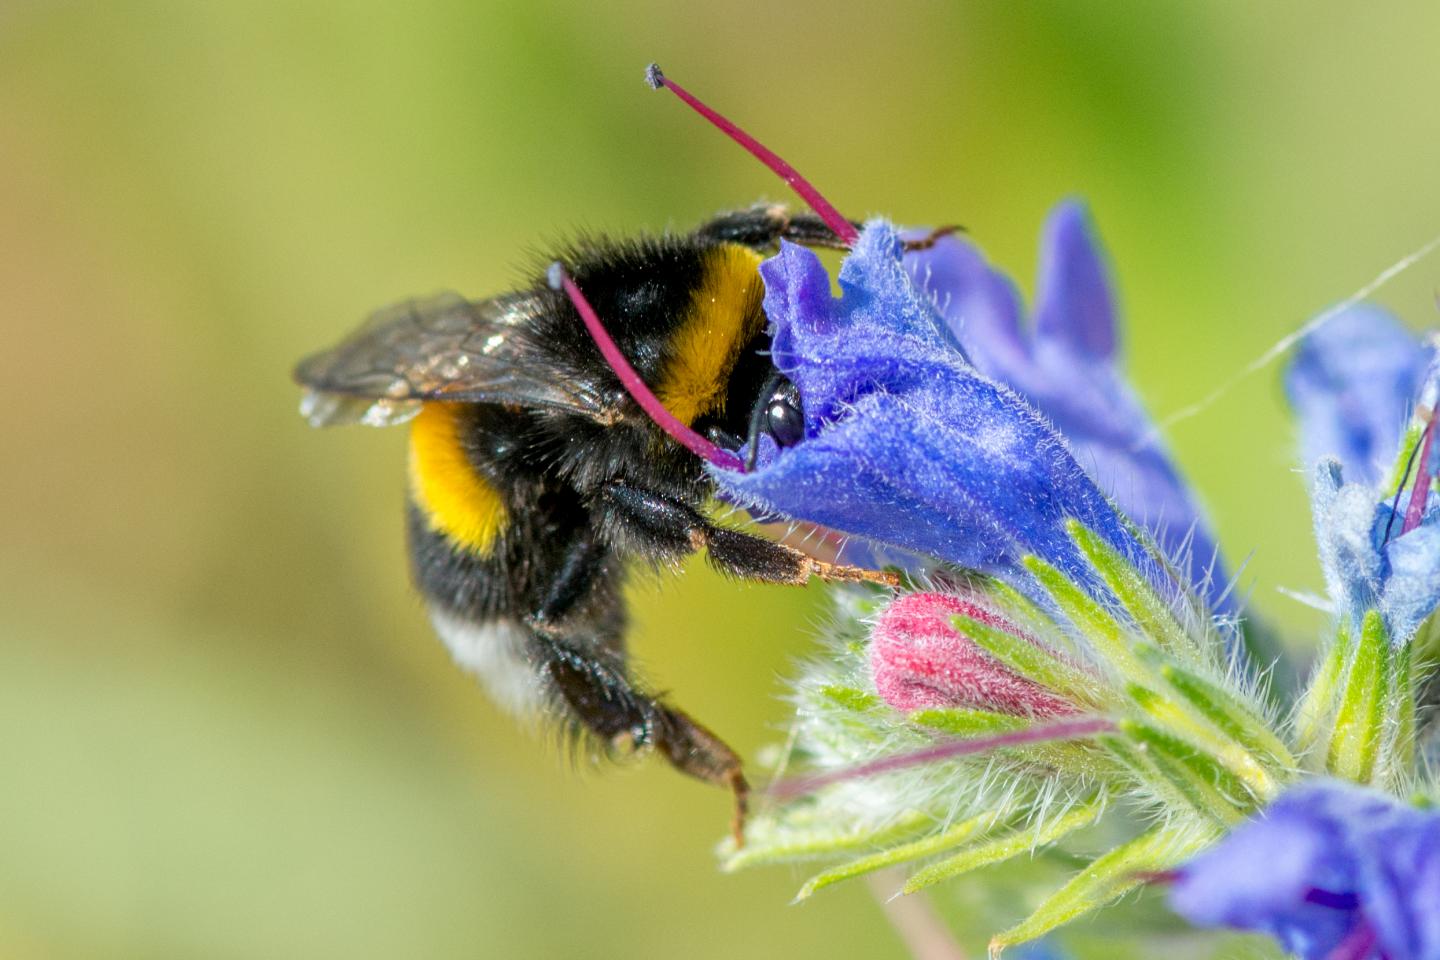 A buff-tailed bumblebee